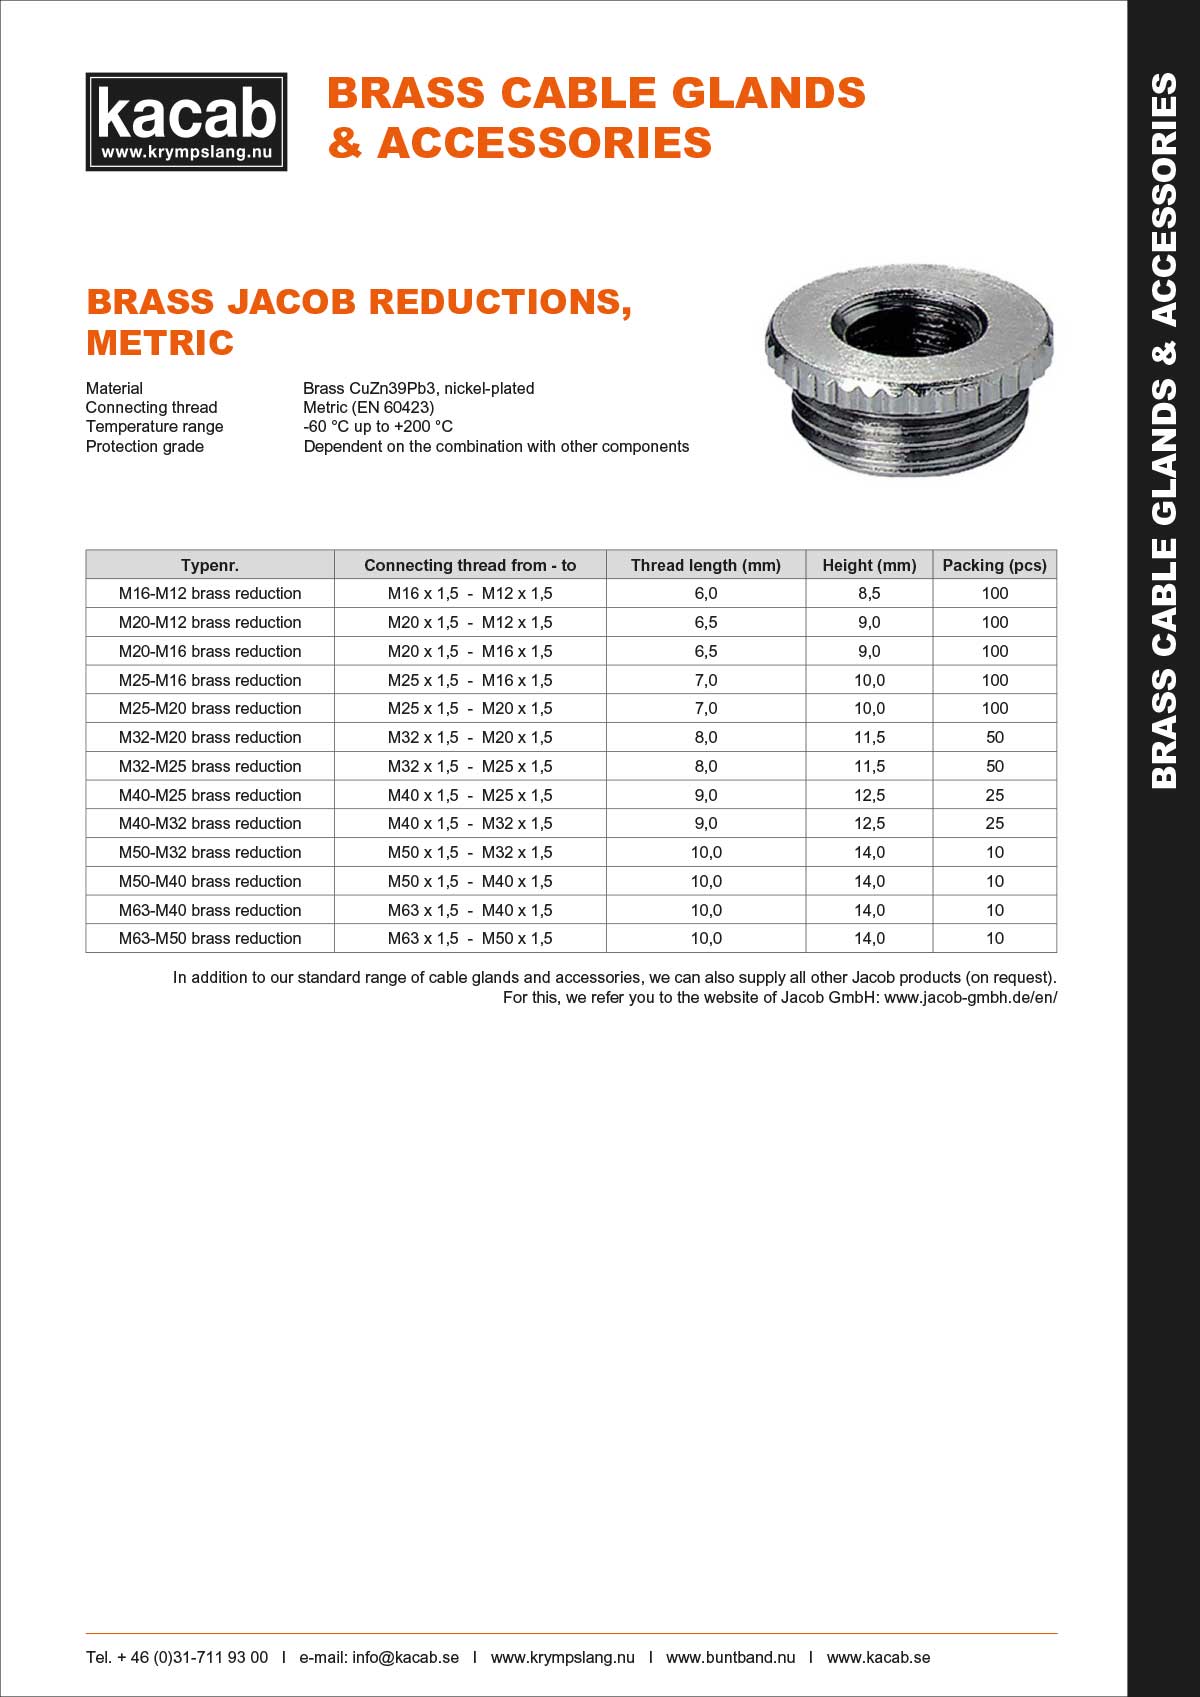 Brass Jacob reductions - Metric